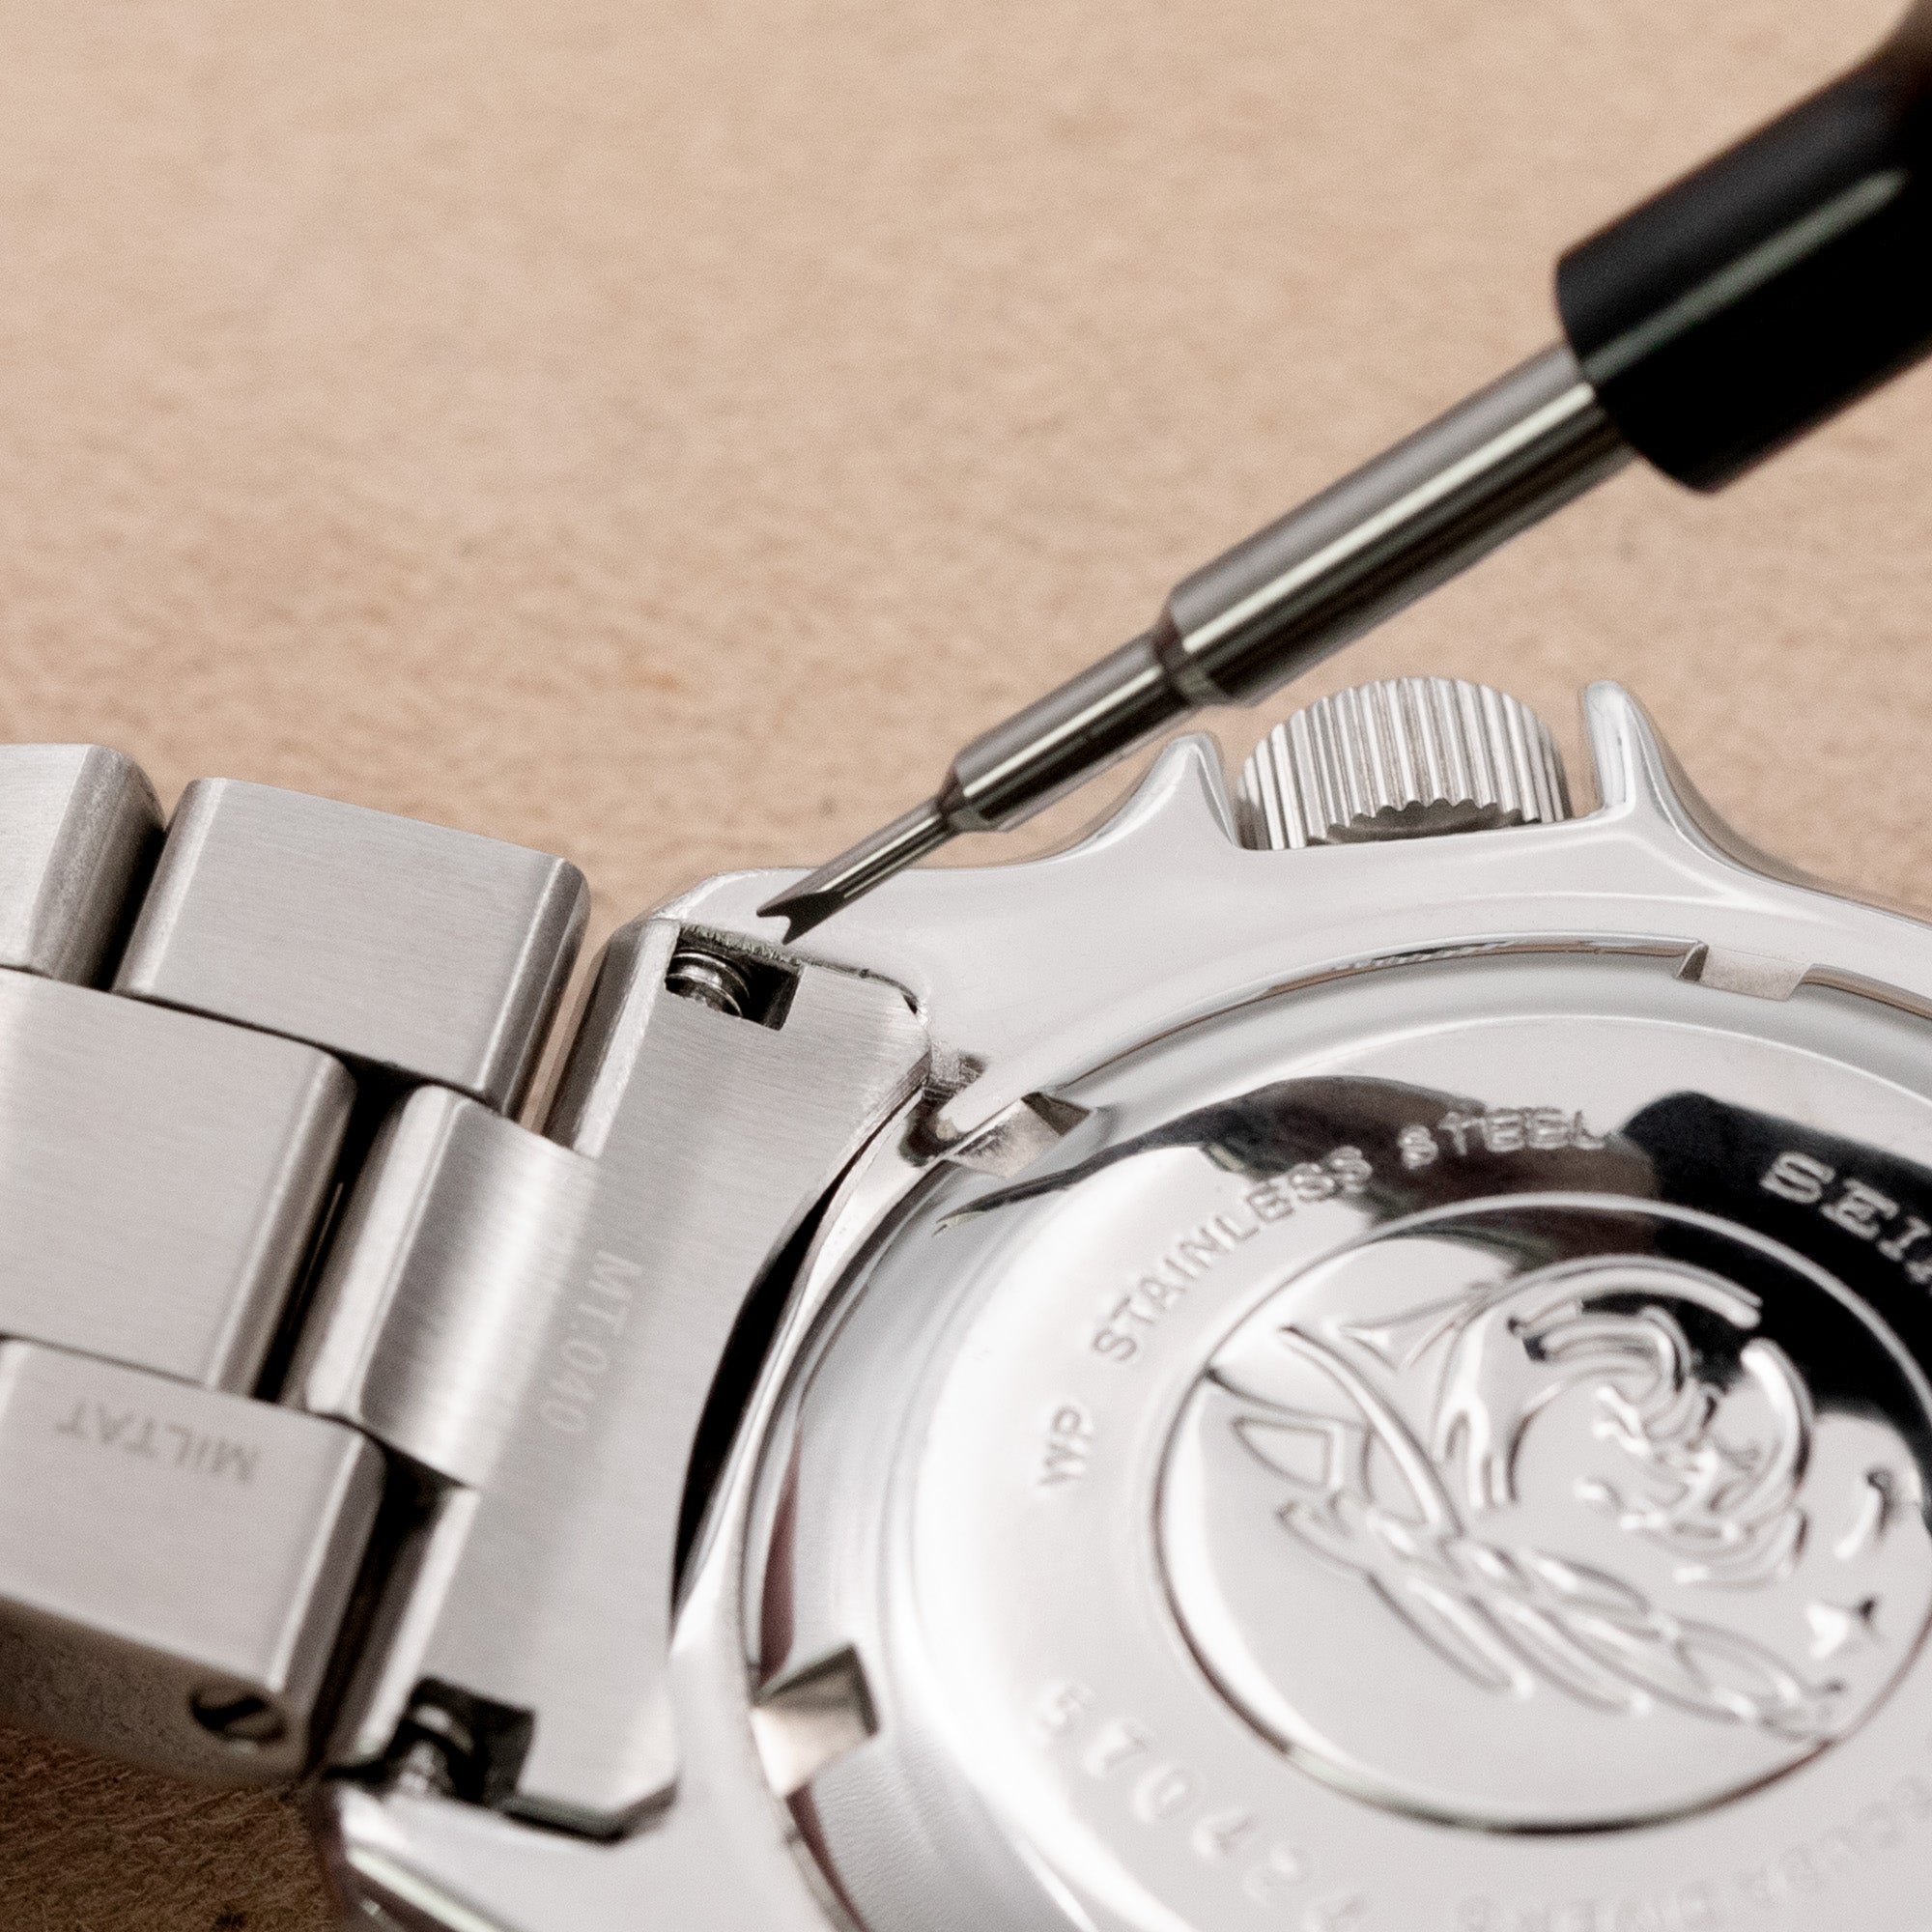 Japan made Elegant Spring Bar Watch Band Tool, Black Strapcode Watch Bands